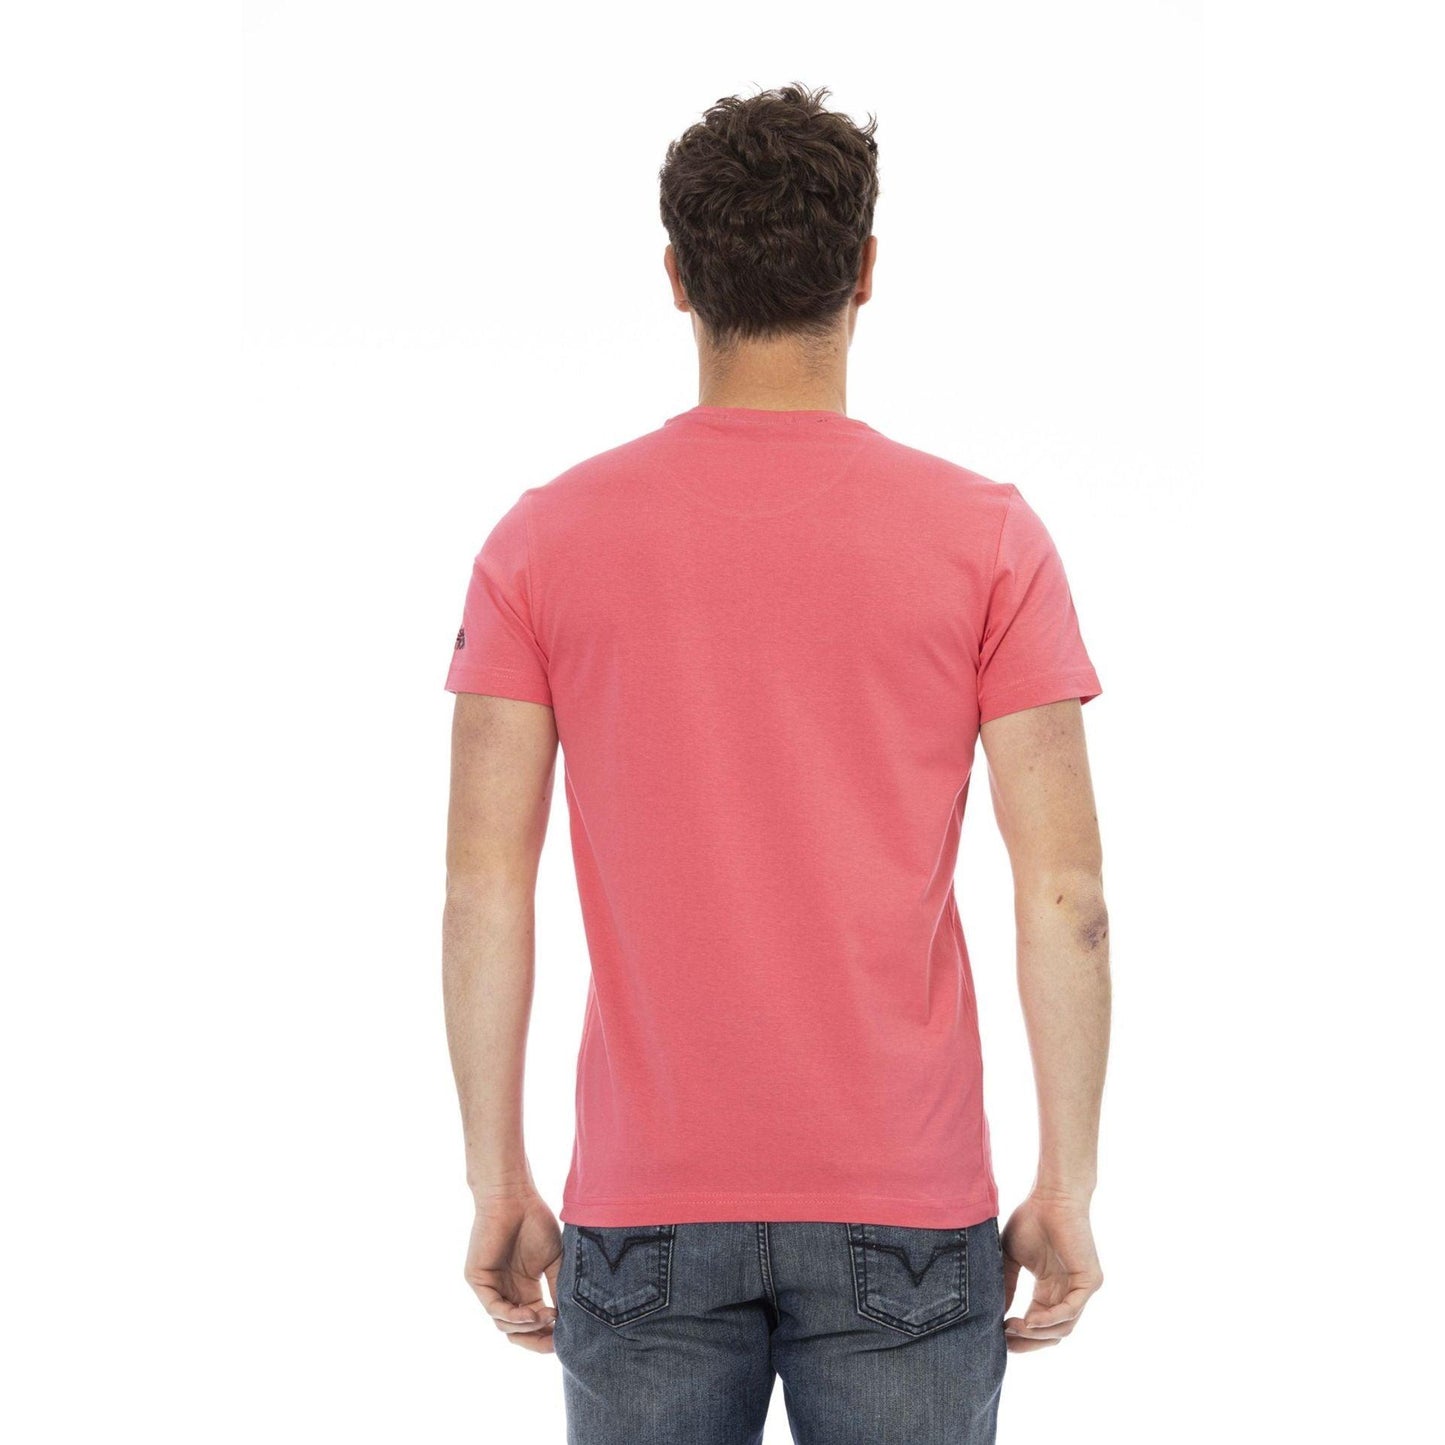 Trussardi Action Men T-shirts - Pink Brand T-shirts - T-Shirt - Guocali